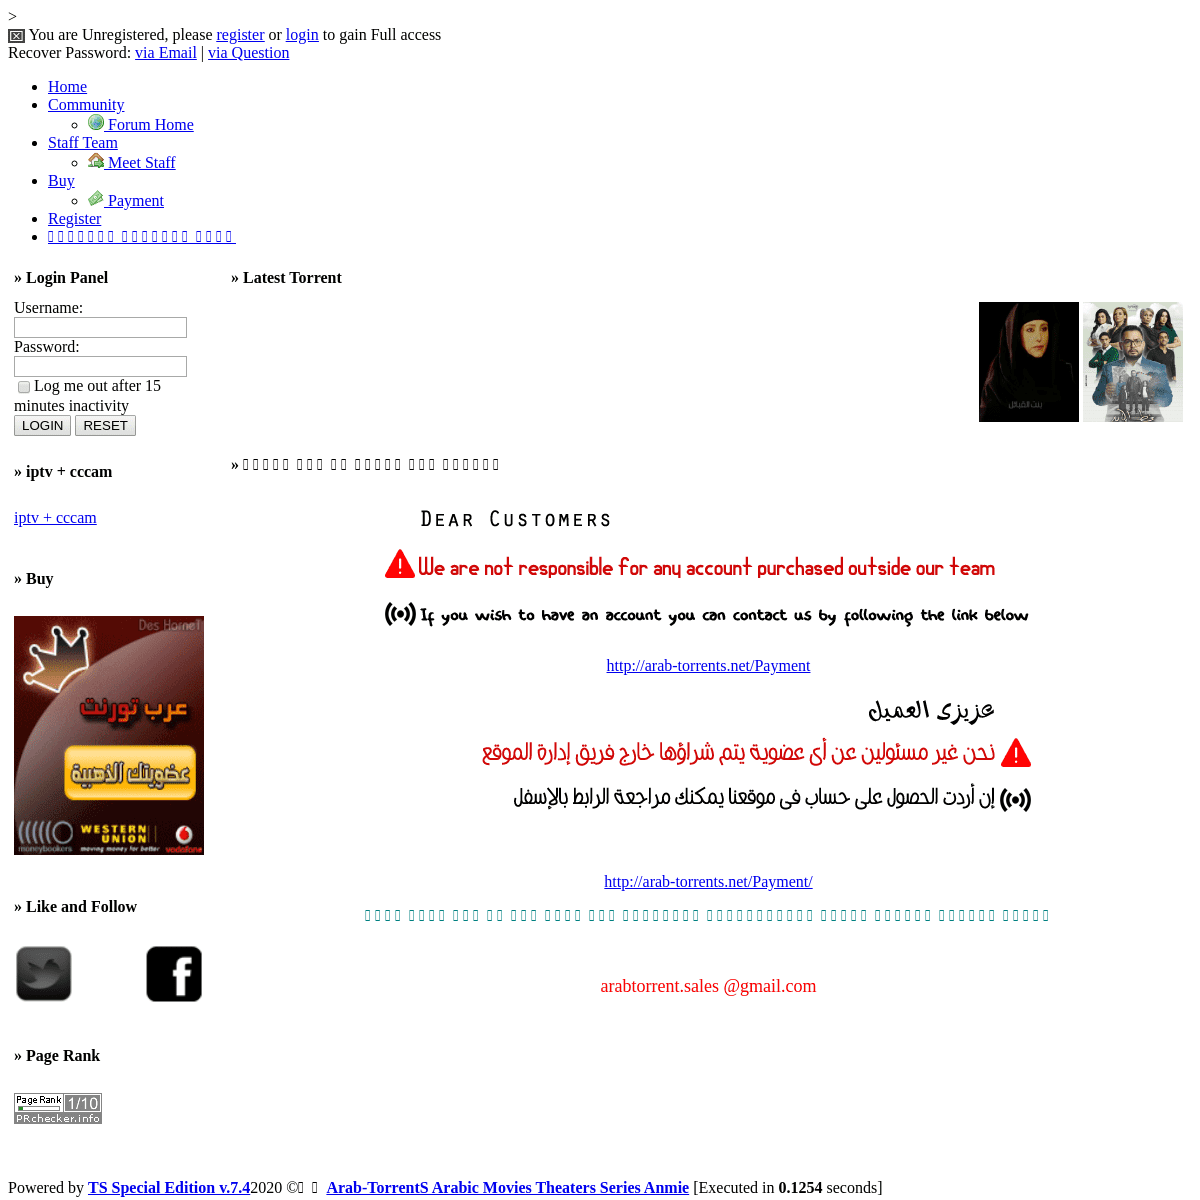 A complete backup of arab-torrents.net